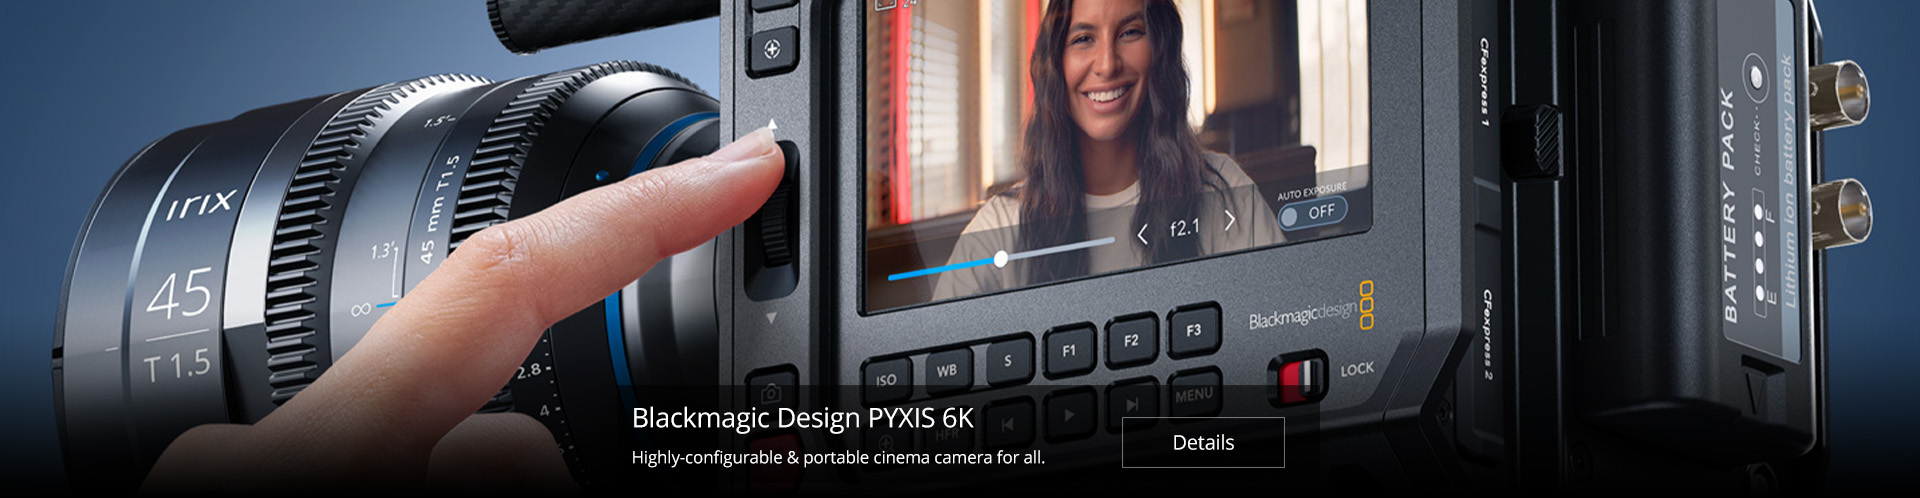 Blackmagic PYXIS 6K cinema camera